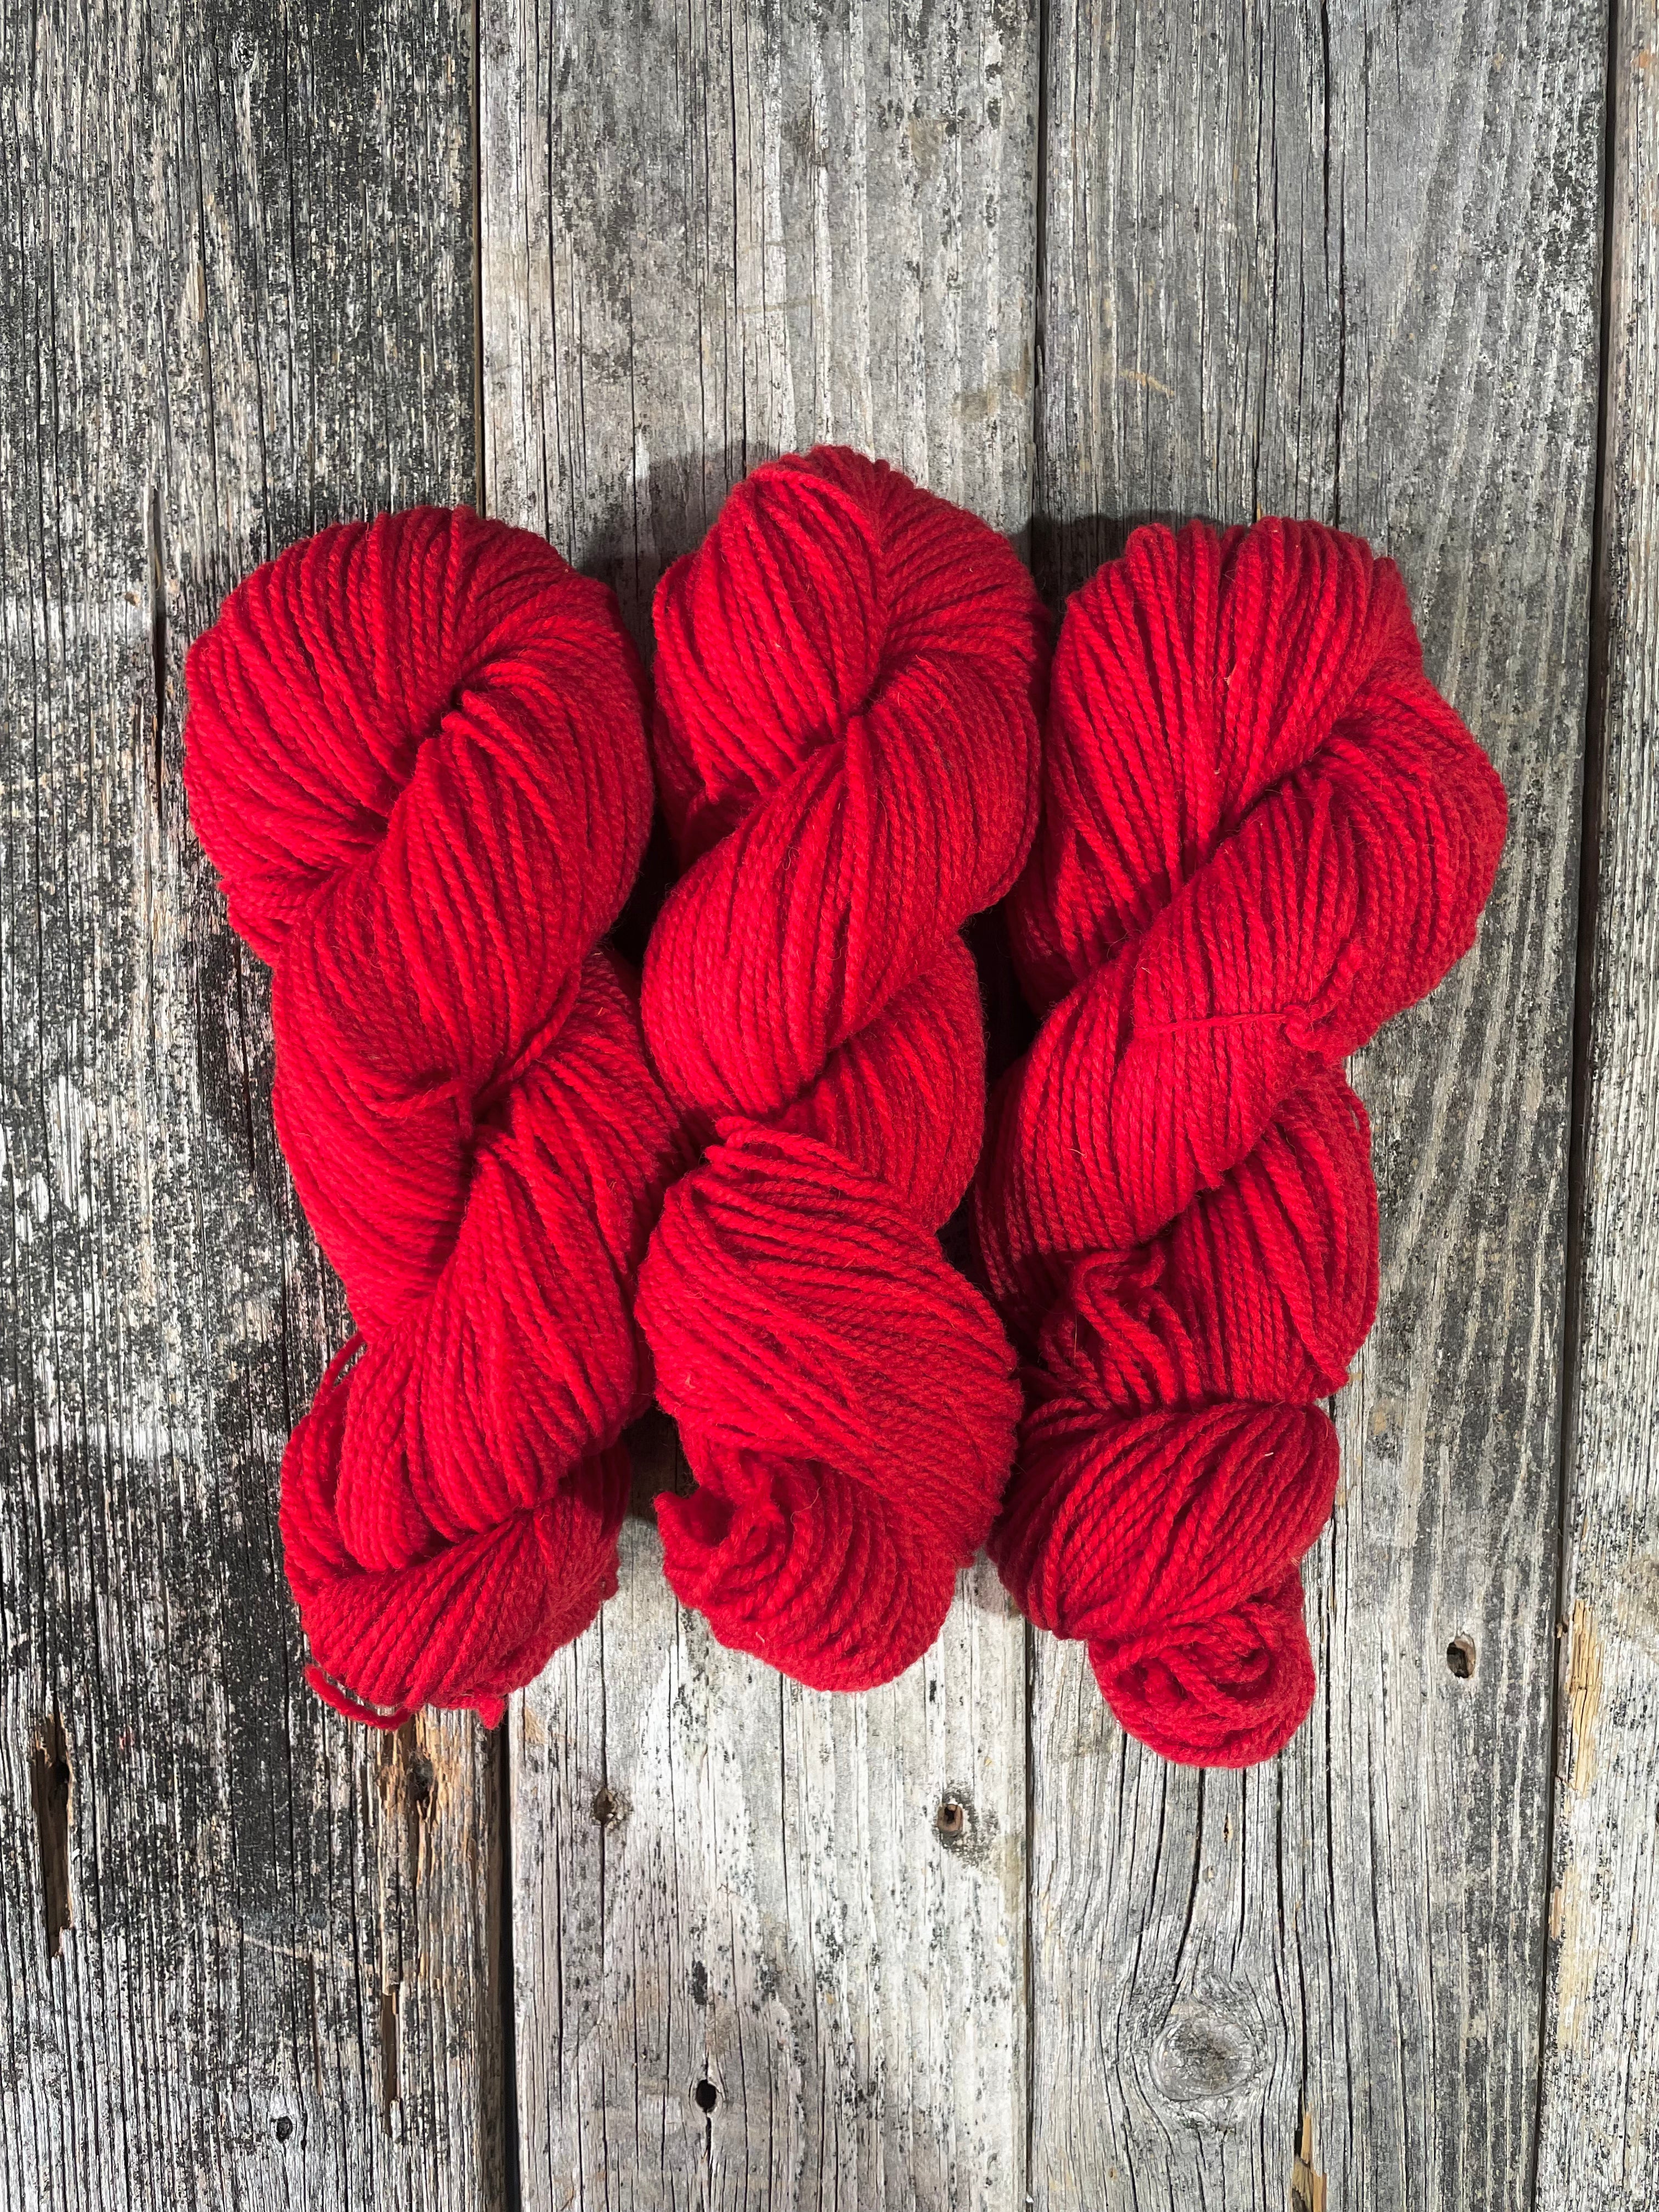 ChiaoGoo Red Lace 24 Circular Knitting Needles